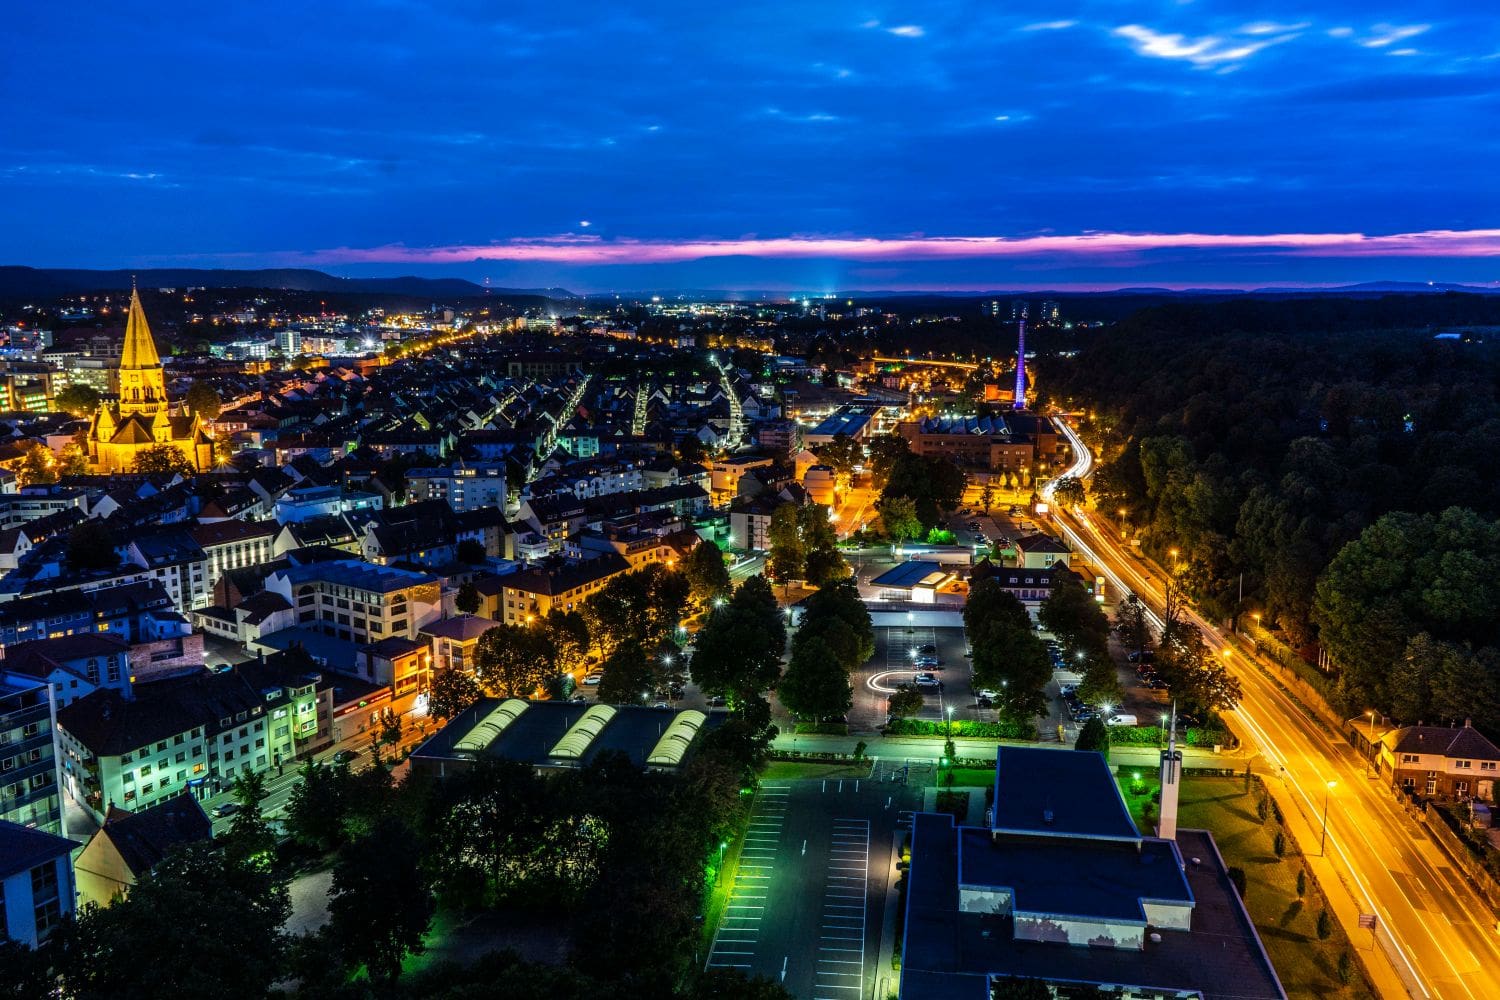 Aerial view of Kaiserslautern at night